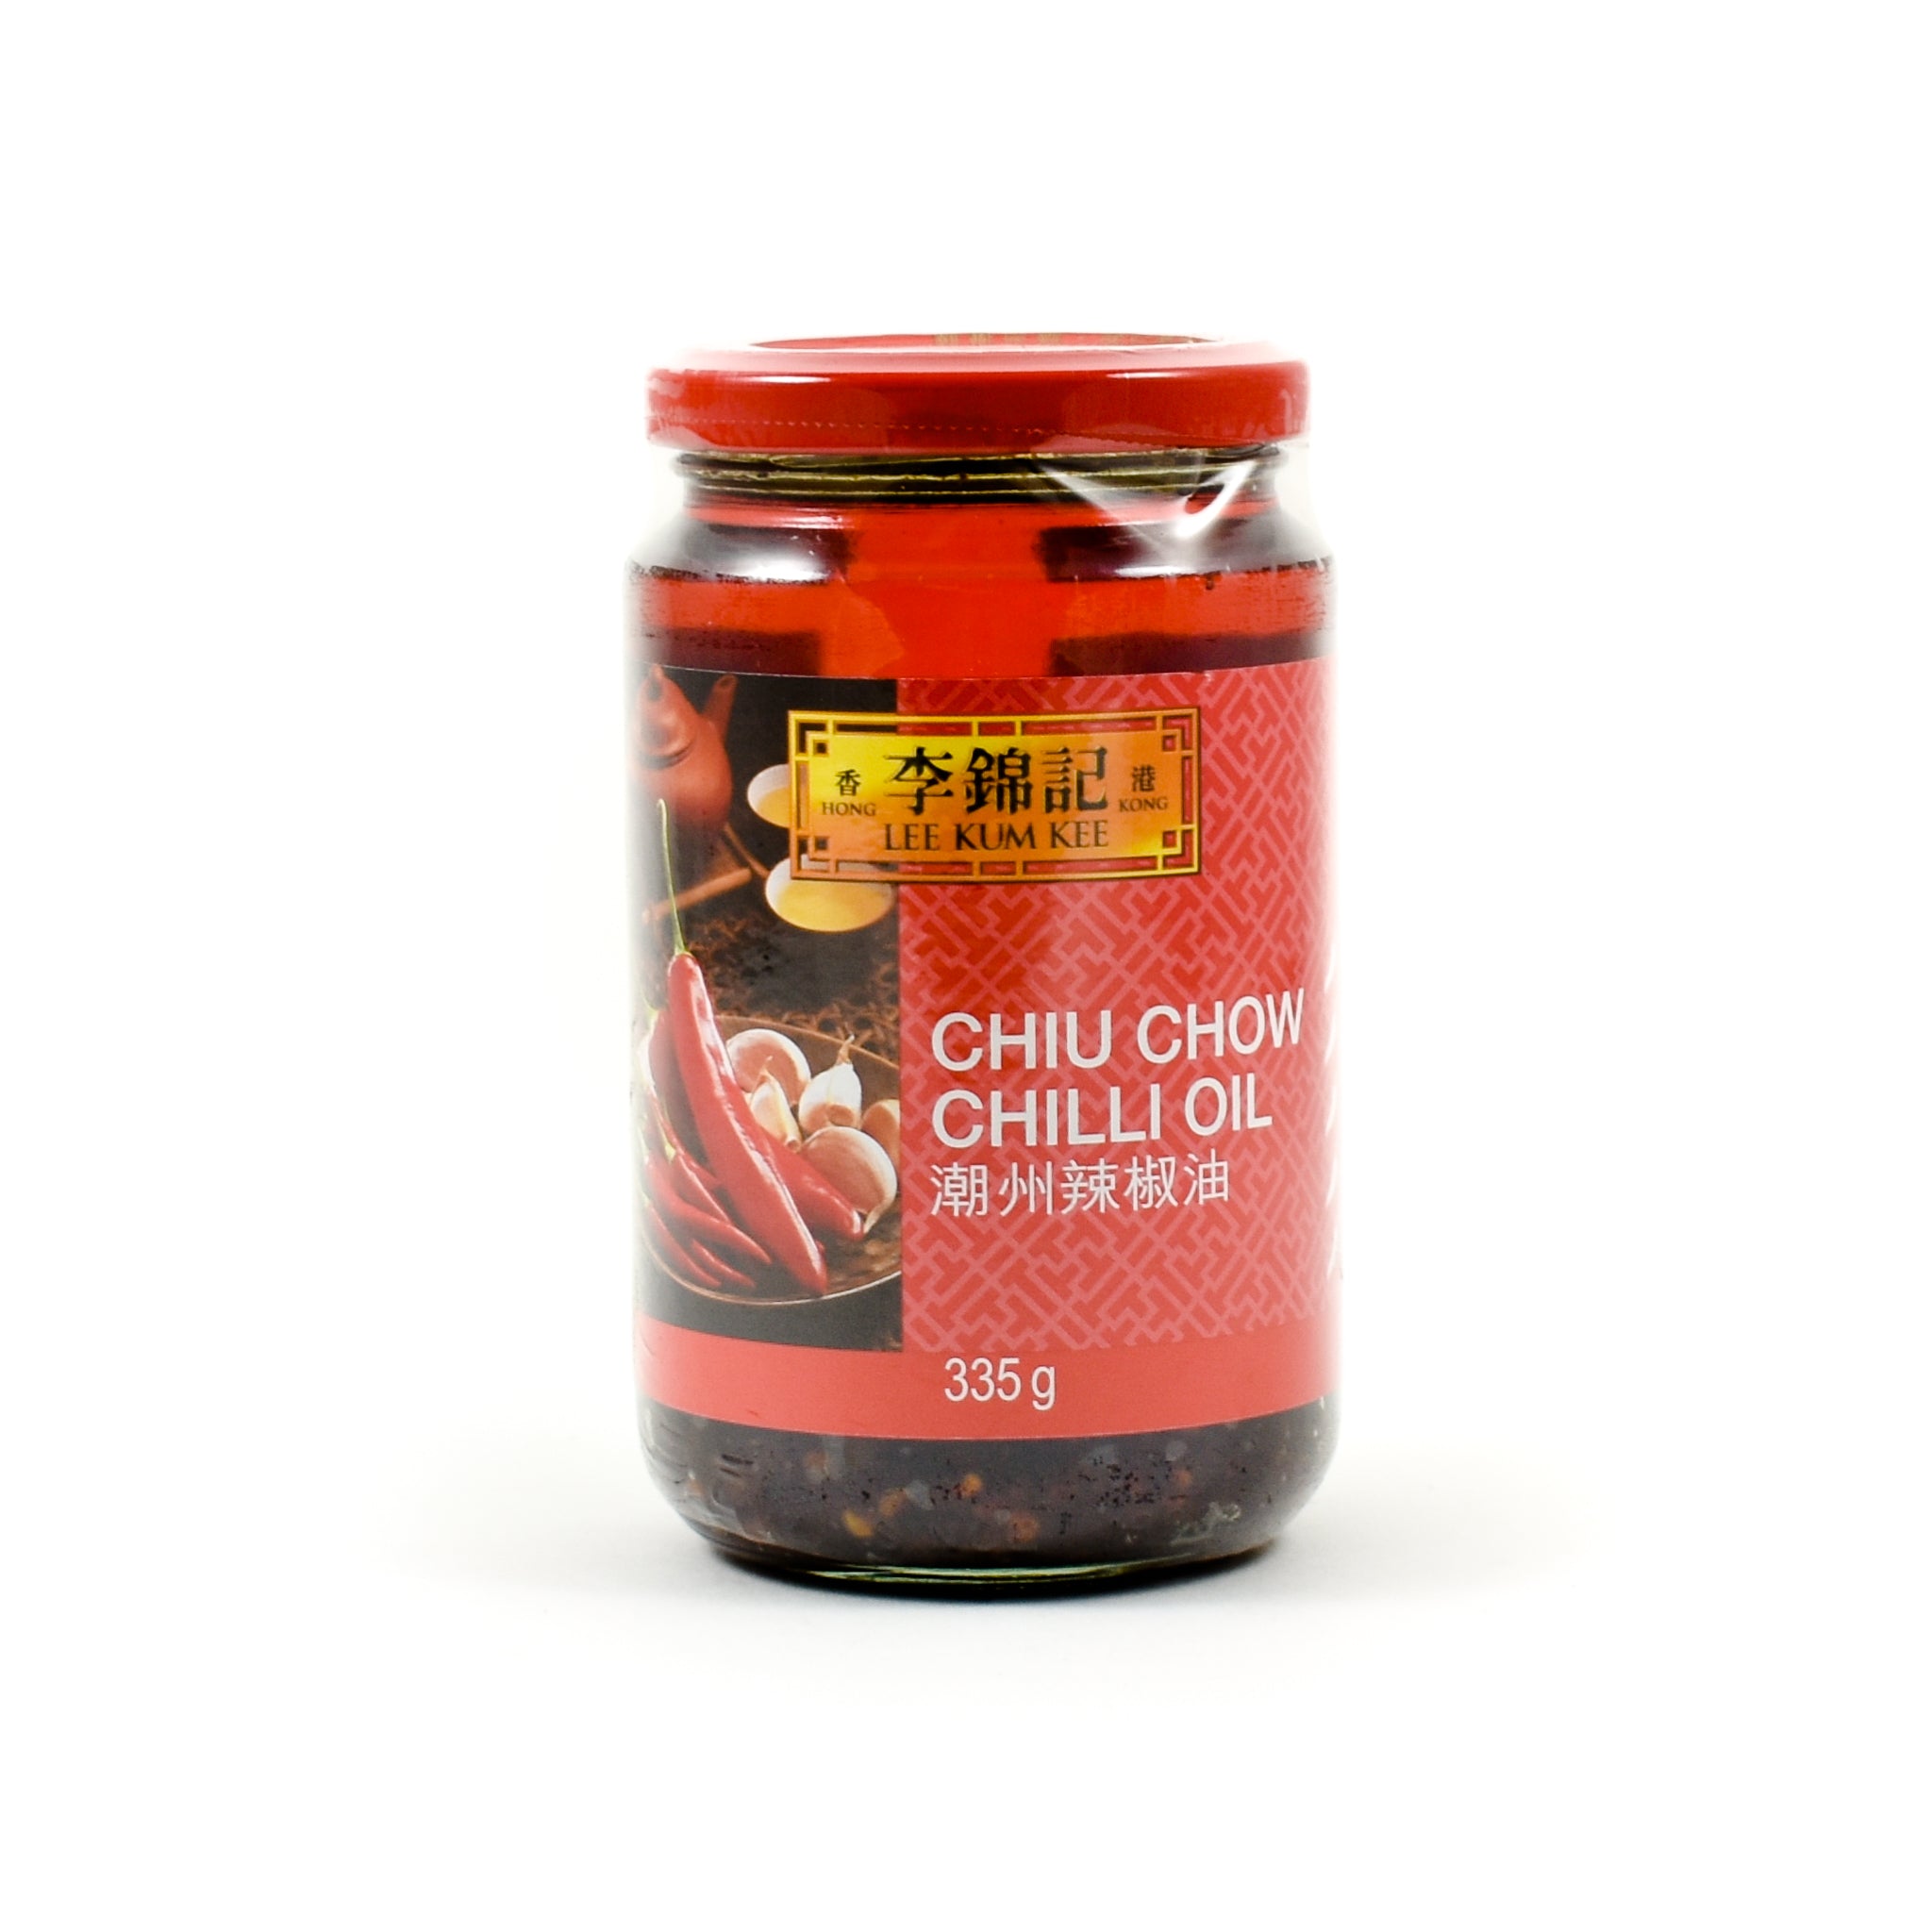 Lee Kum Kee Chiu Chow Chilli Oil